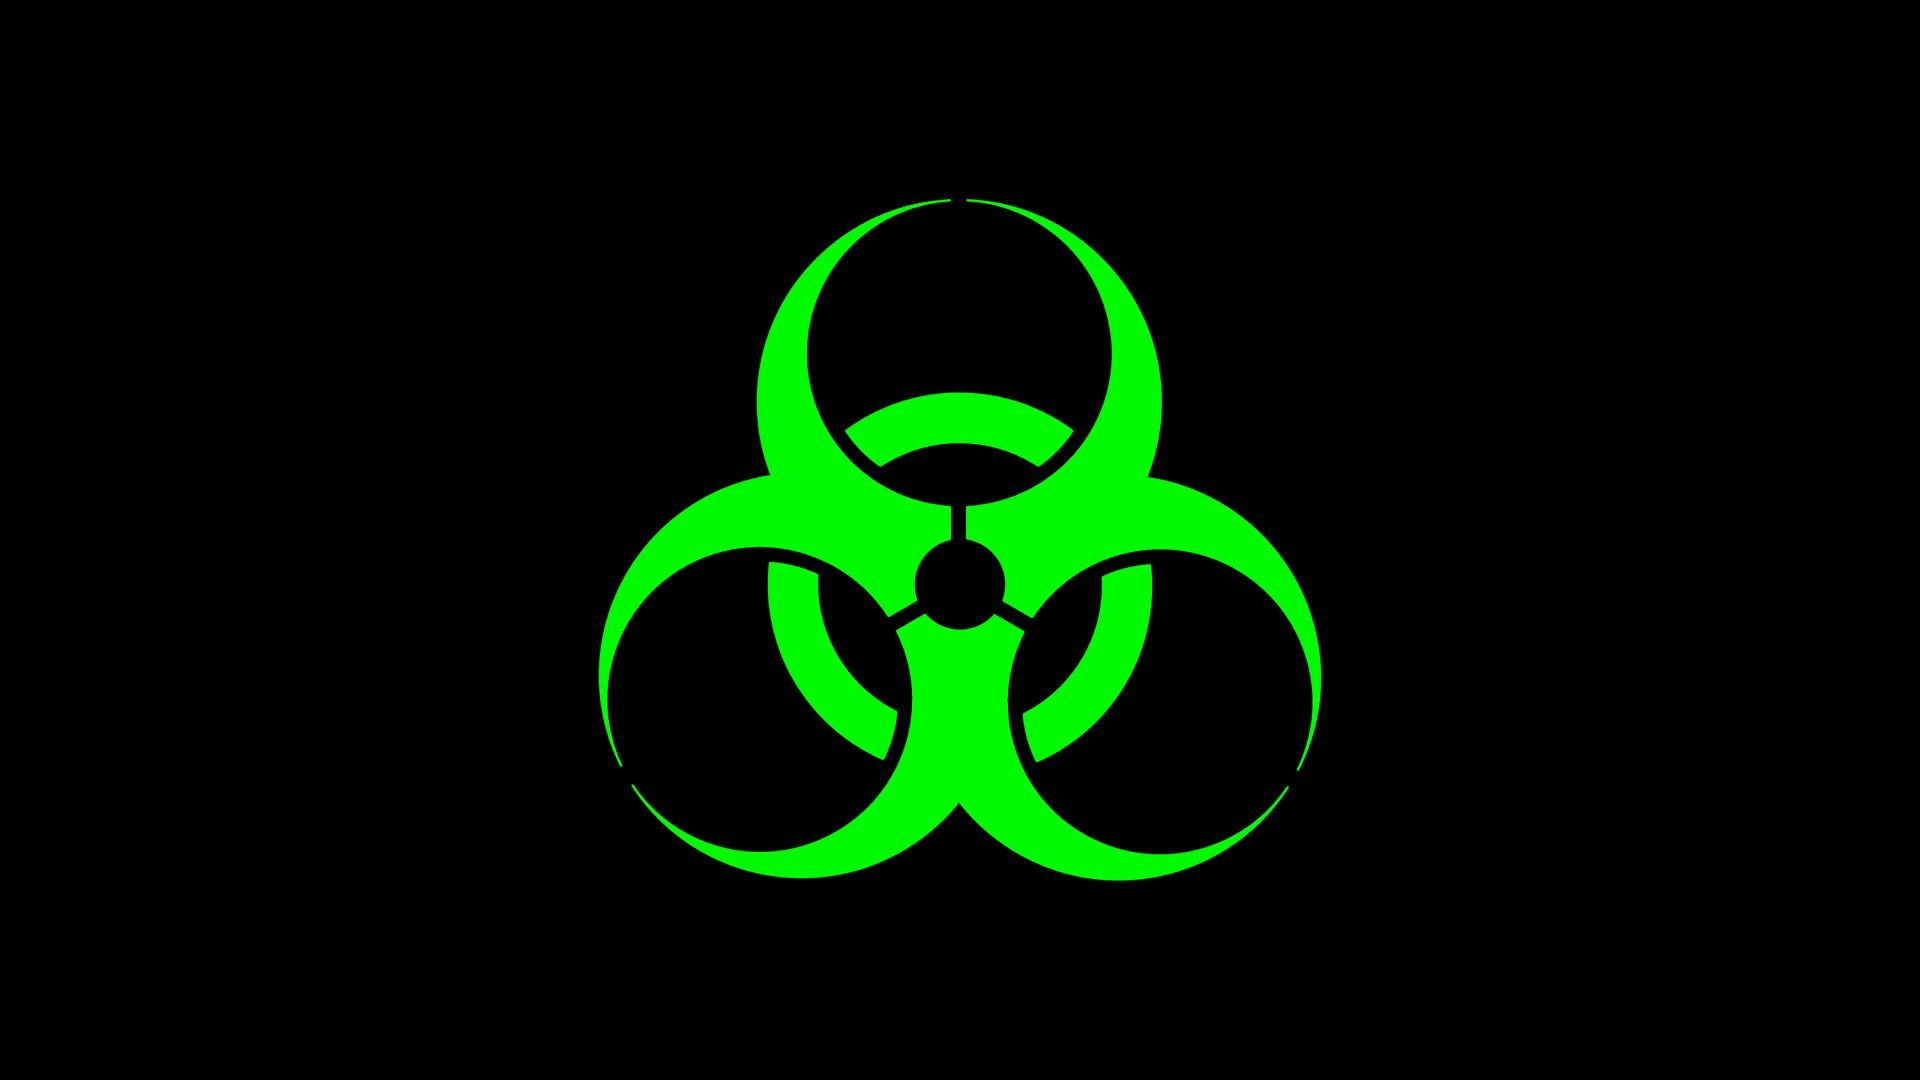 Wallpaper.wiki Download Free Biohazard Symbol Wallpaper PIC